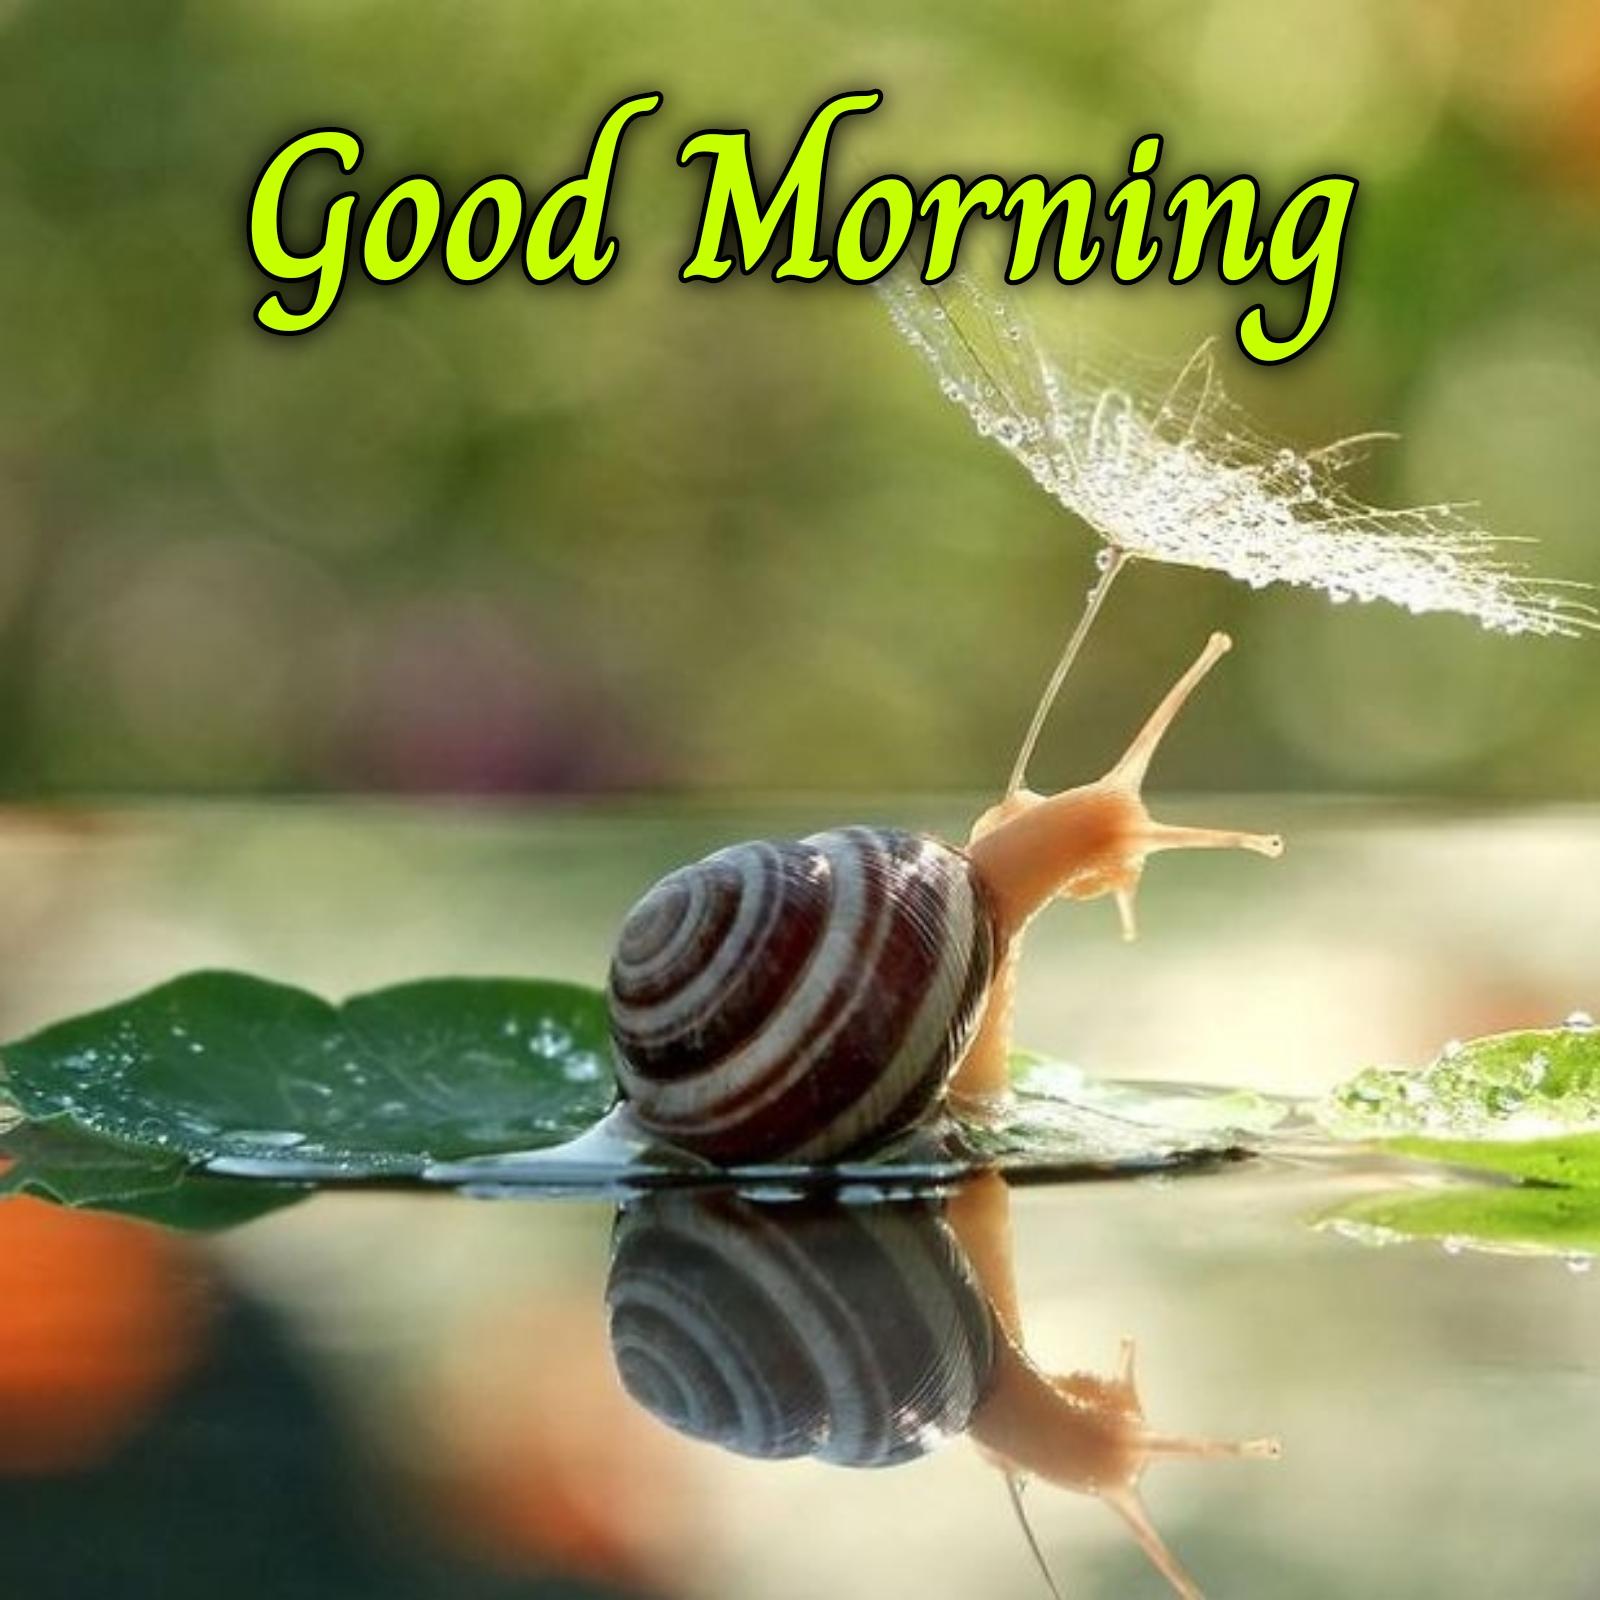 Good Morning Snail In Rain Images